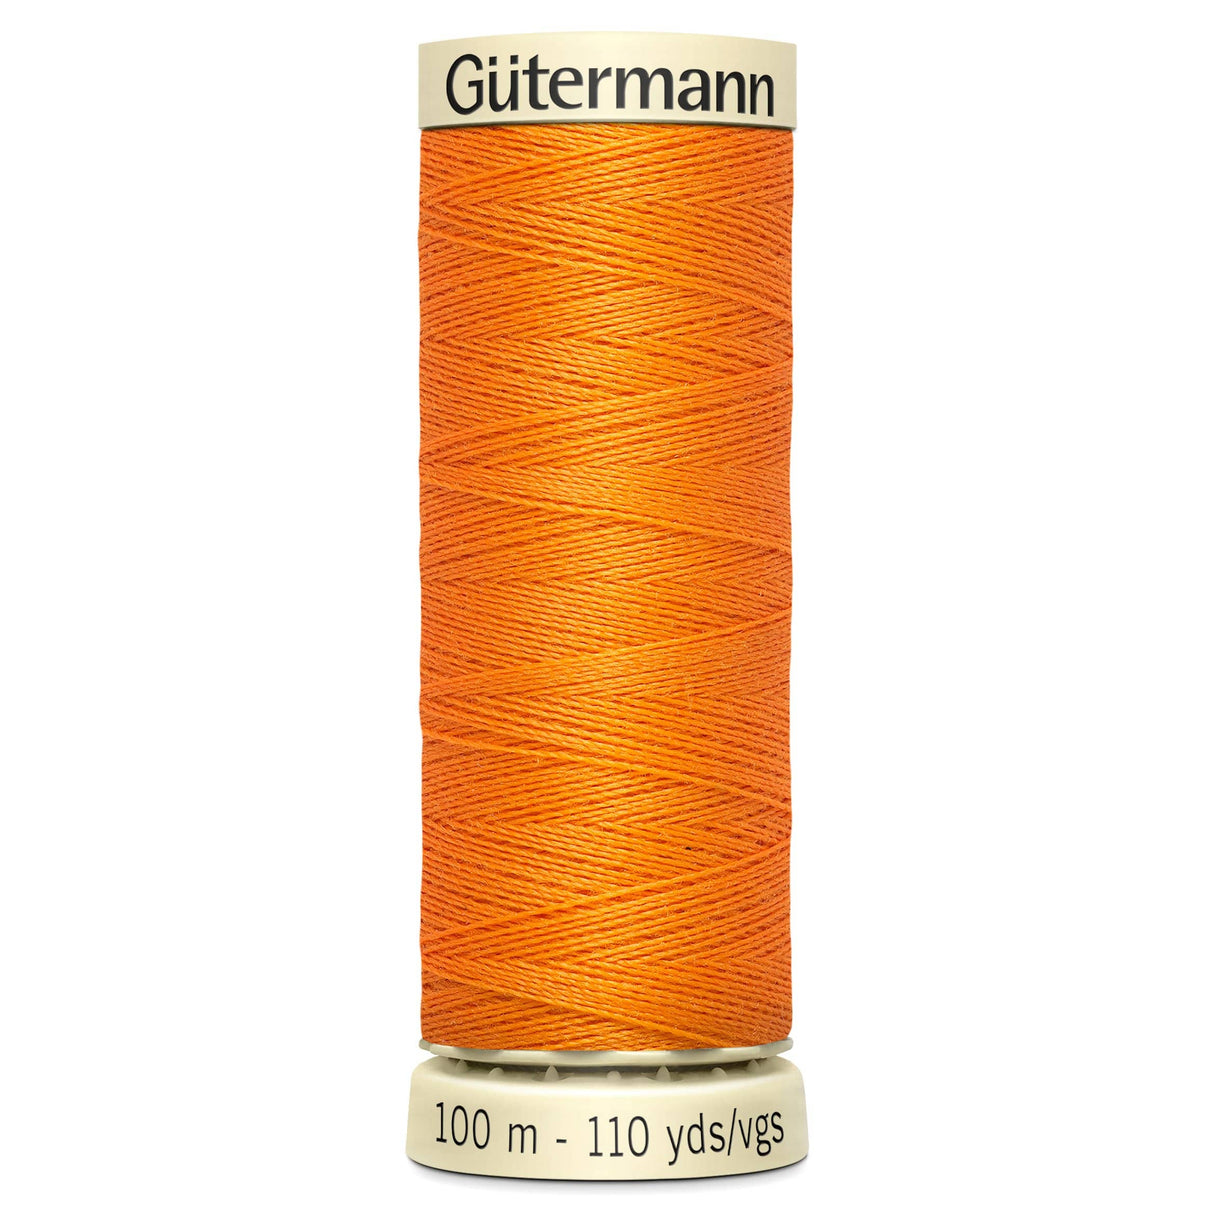 Groves Haberdashery 350 Gutermann Thread Sewing Cotton 100 m Black to Pink